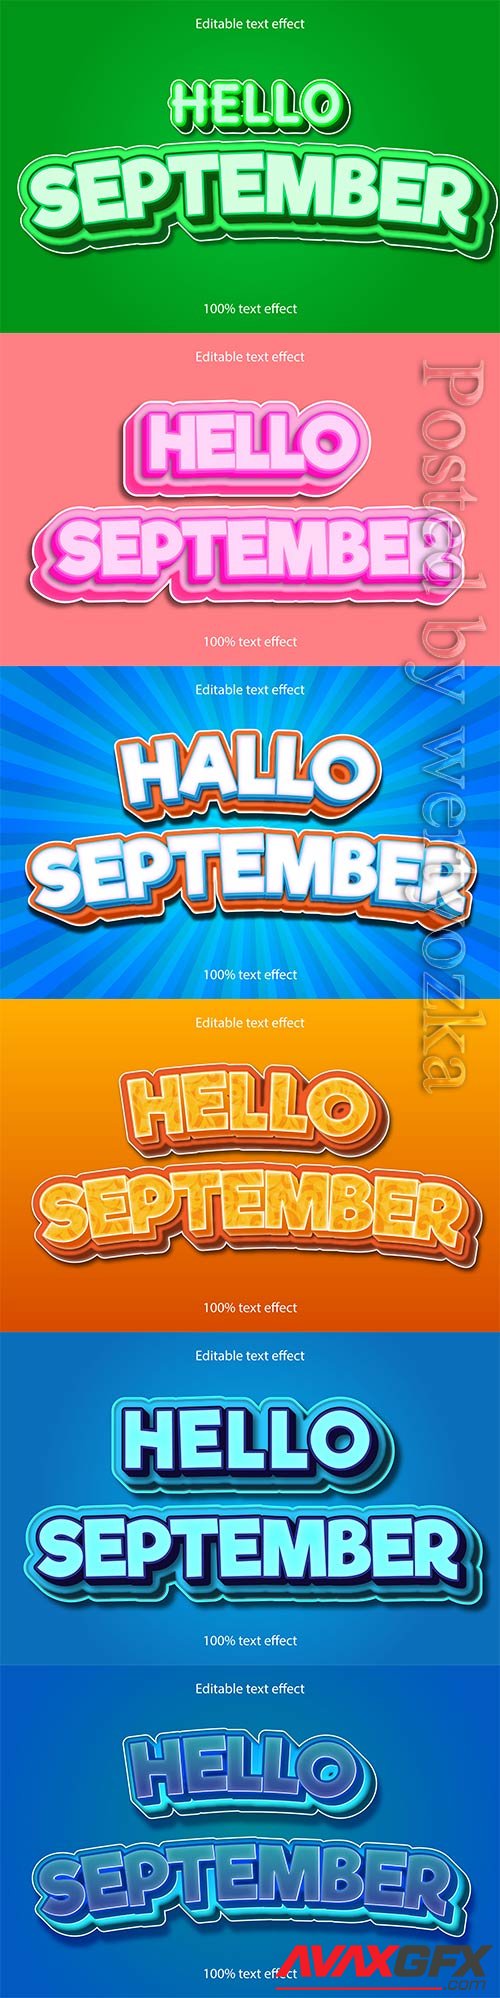 Hello september editable text effect vol 8